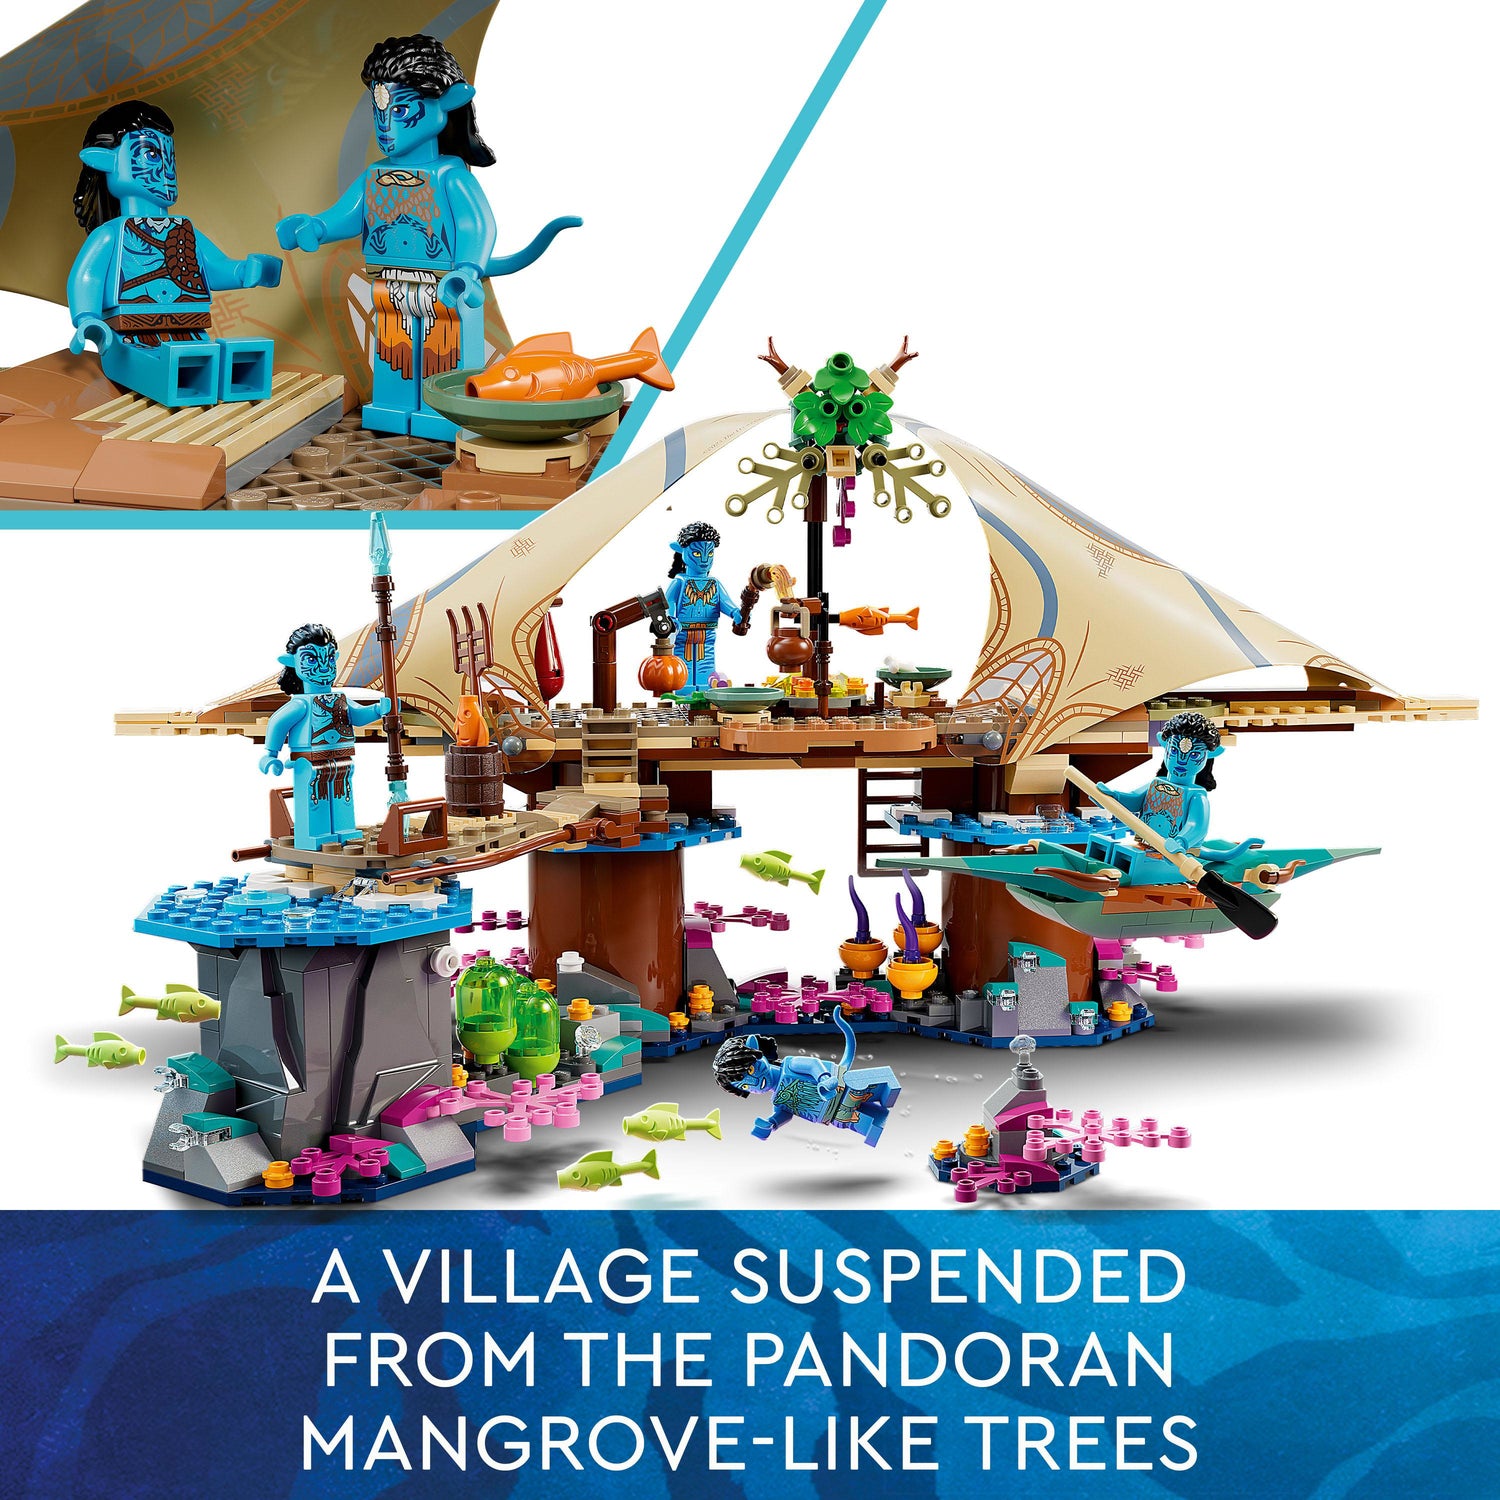 LEGO 75578 Avatar Metkayina Reef Home, Building Toy with Village, Canoe,  Pandora Scenes, Neytiri and Tonowari Minifigures, The Way of Water Movie Set